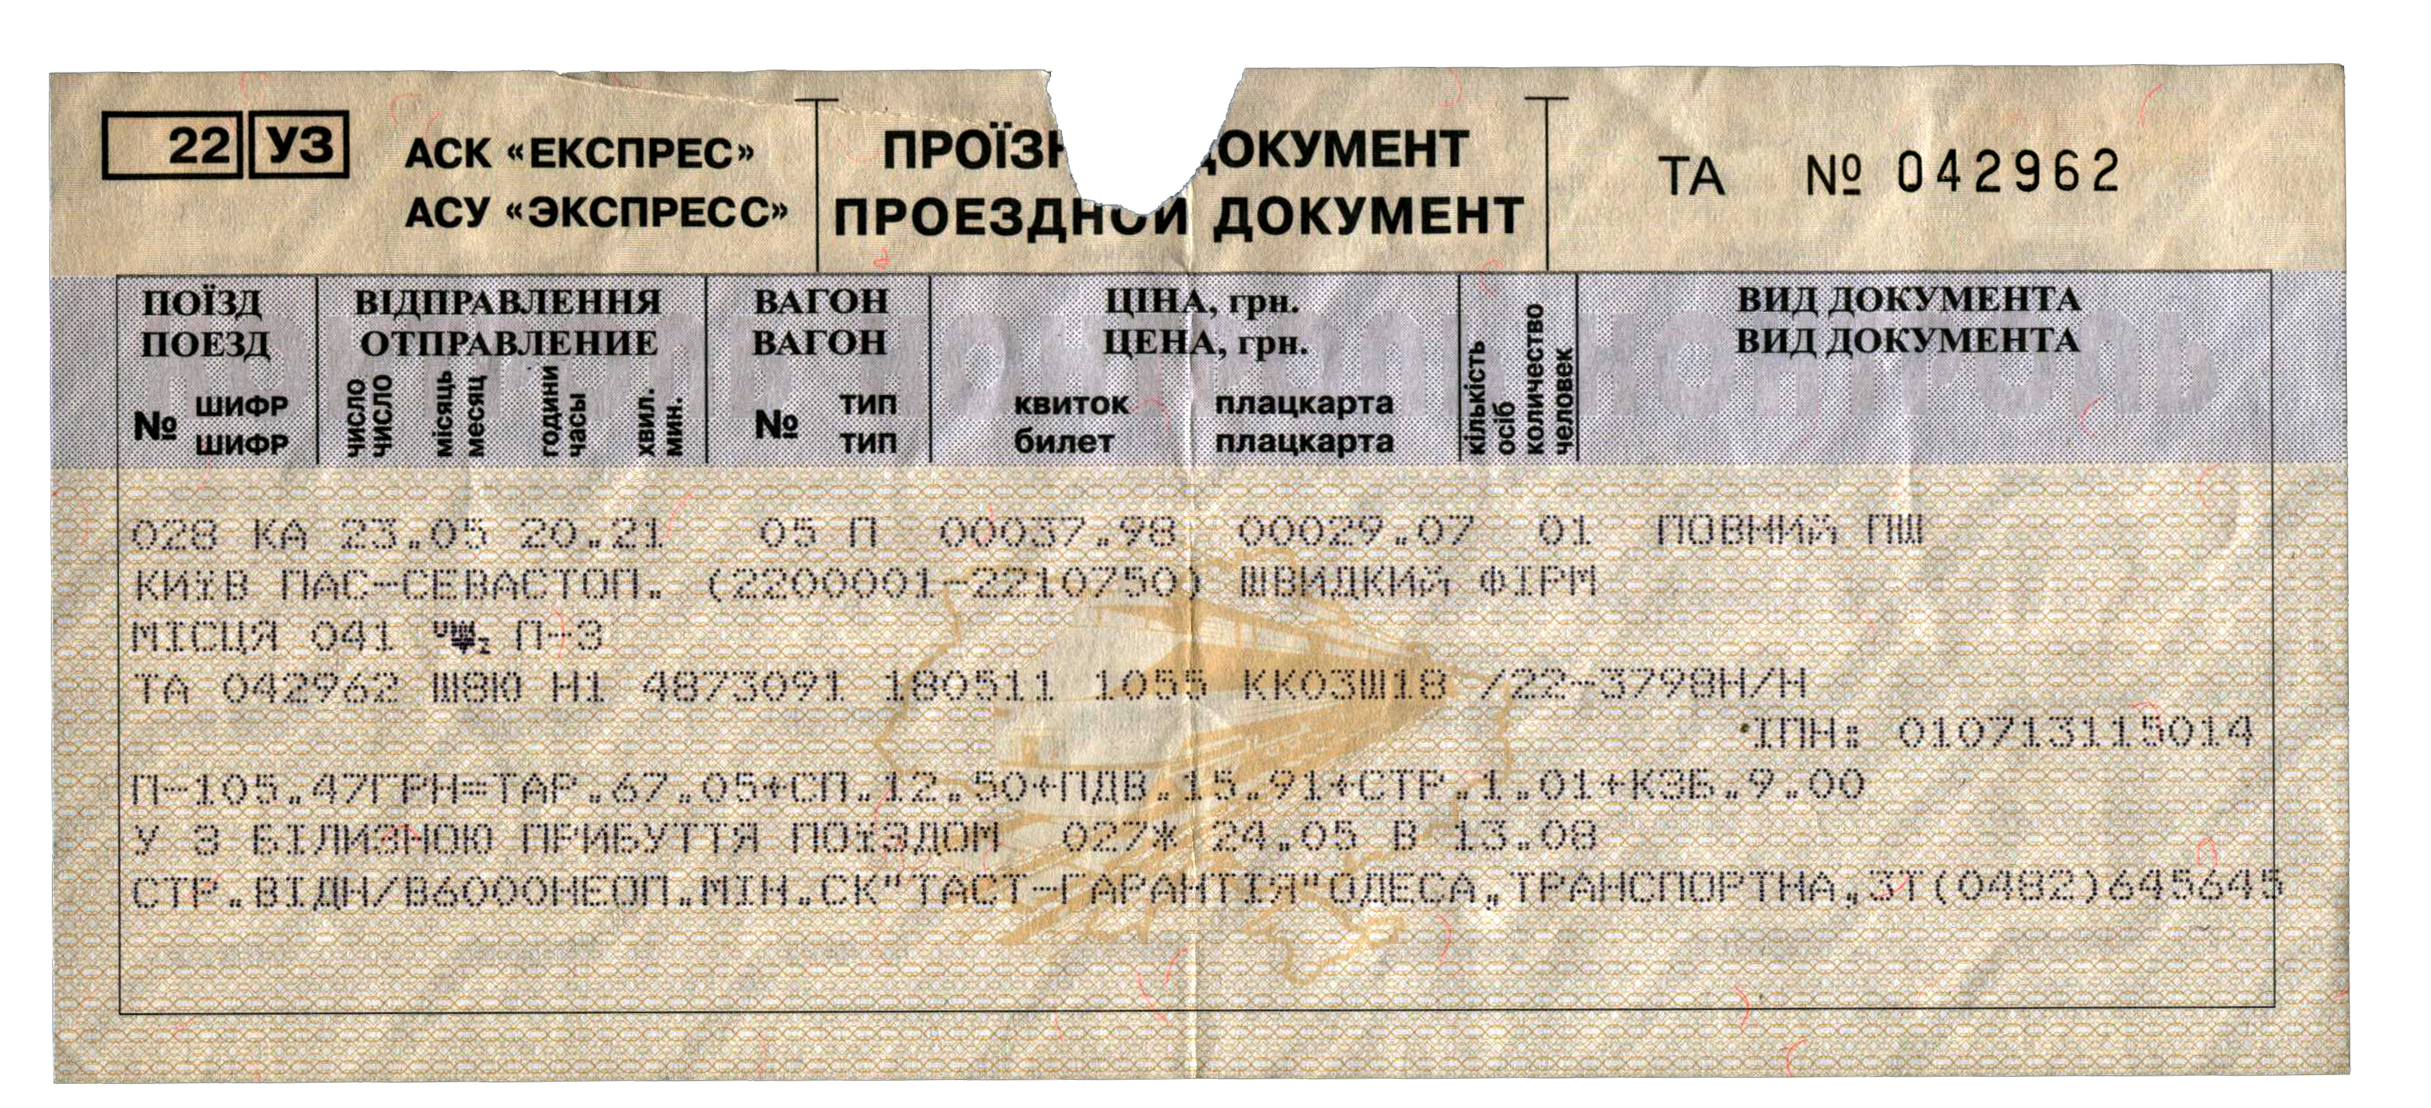 Новороссийск москва поезд билеты сайт ржд. Билет на поезд. Билеты ЖД на поезд. Железнодорожный билет билет. Билеты на поезд РЖД.